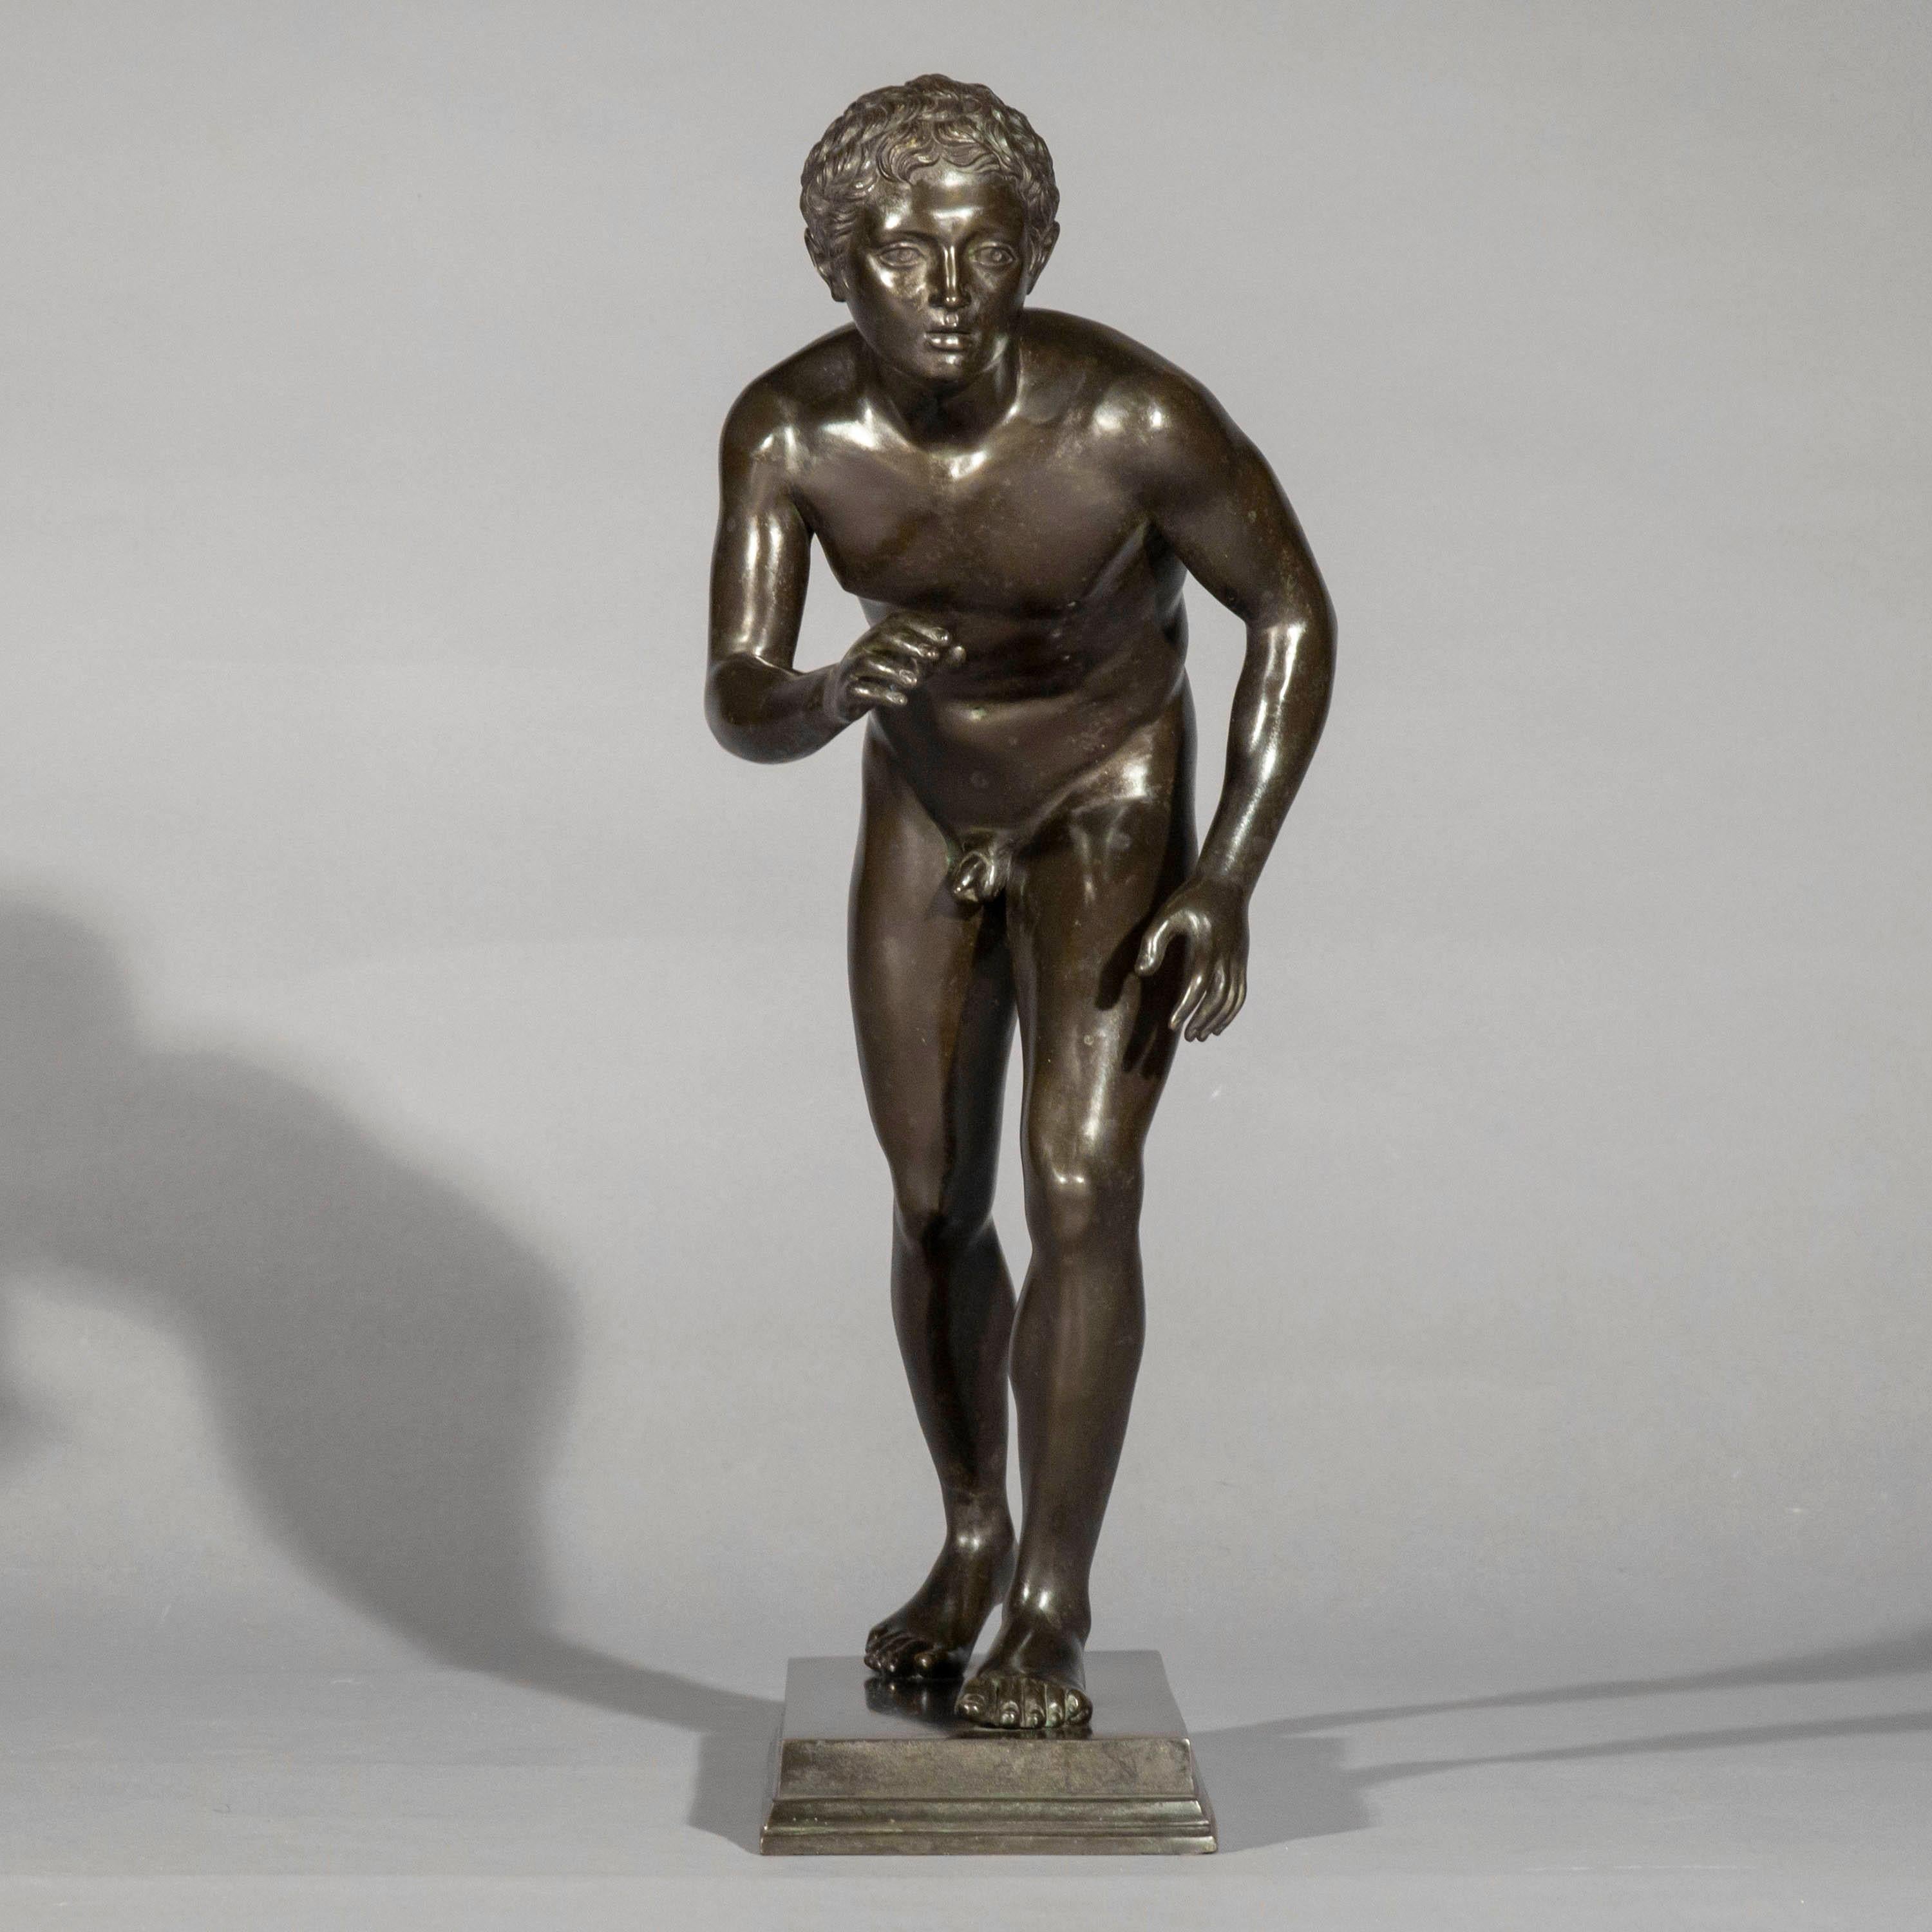 19th Century Antique Bronze Sculpture of an Athlete